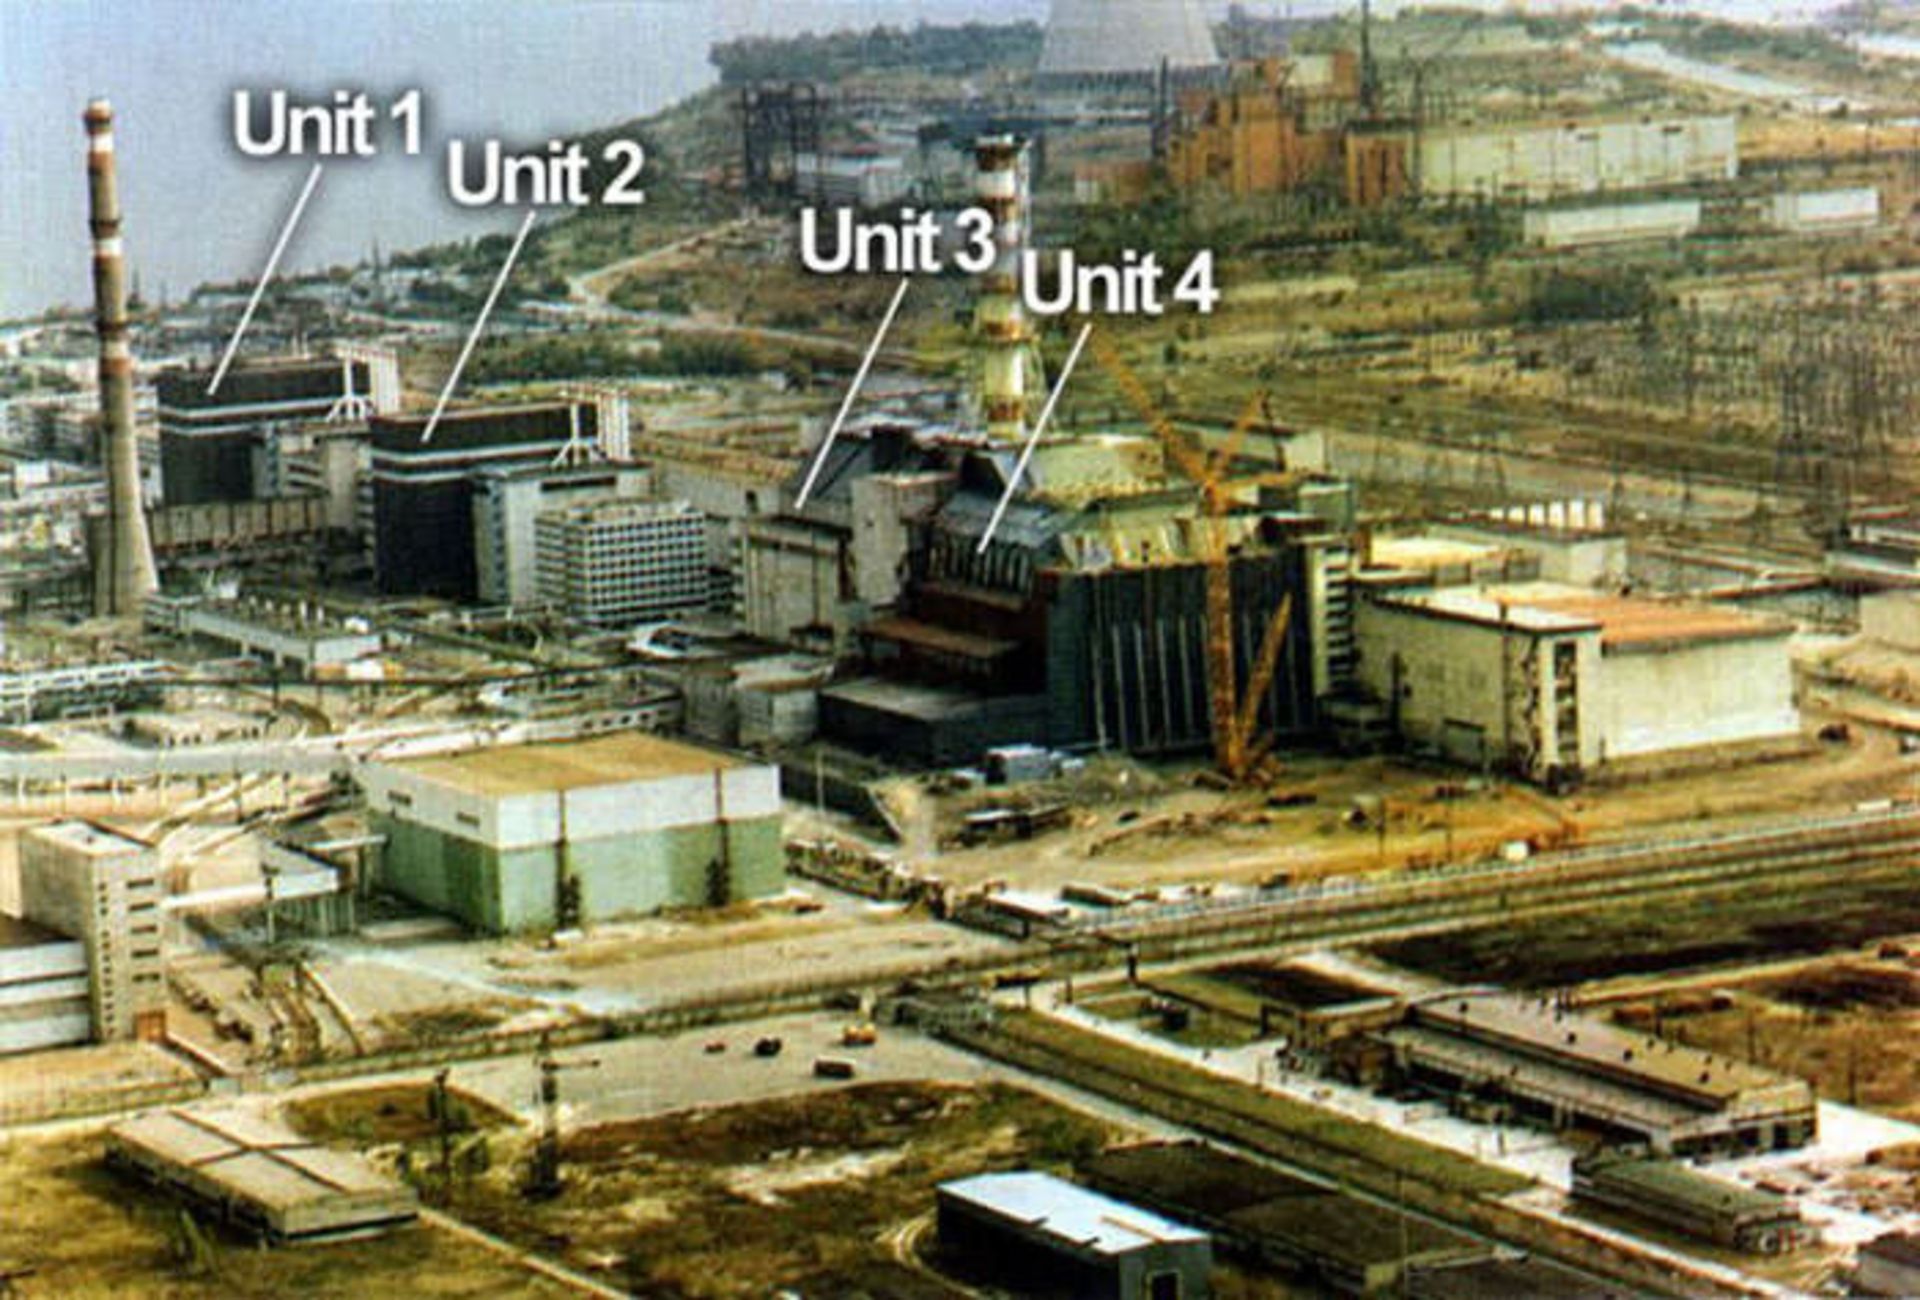 چرنوبیل / Chernobyl